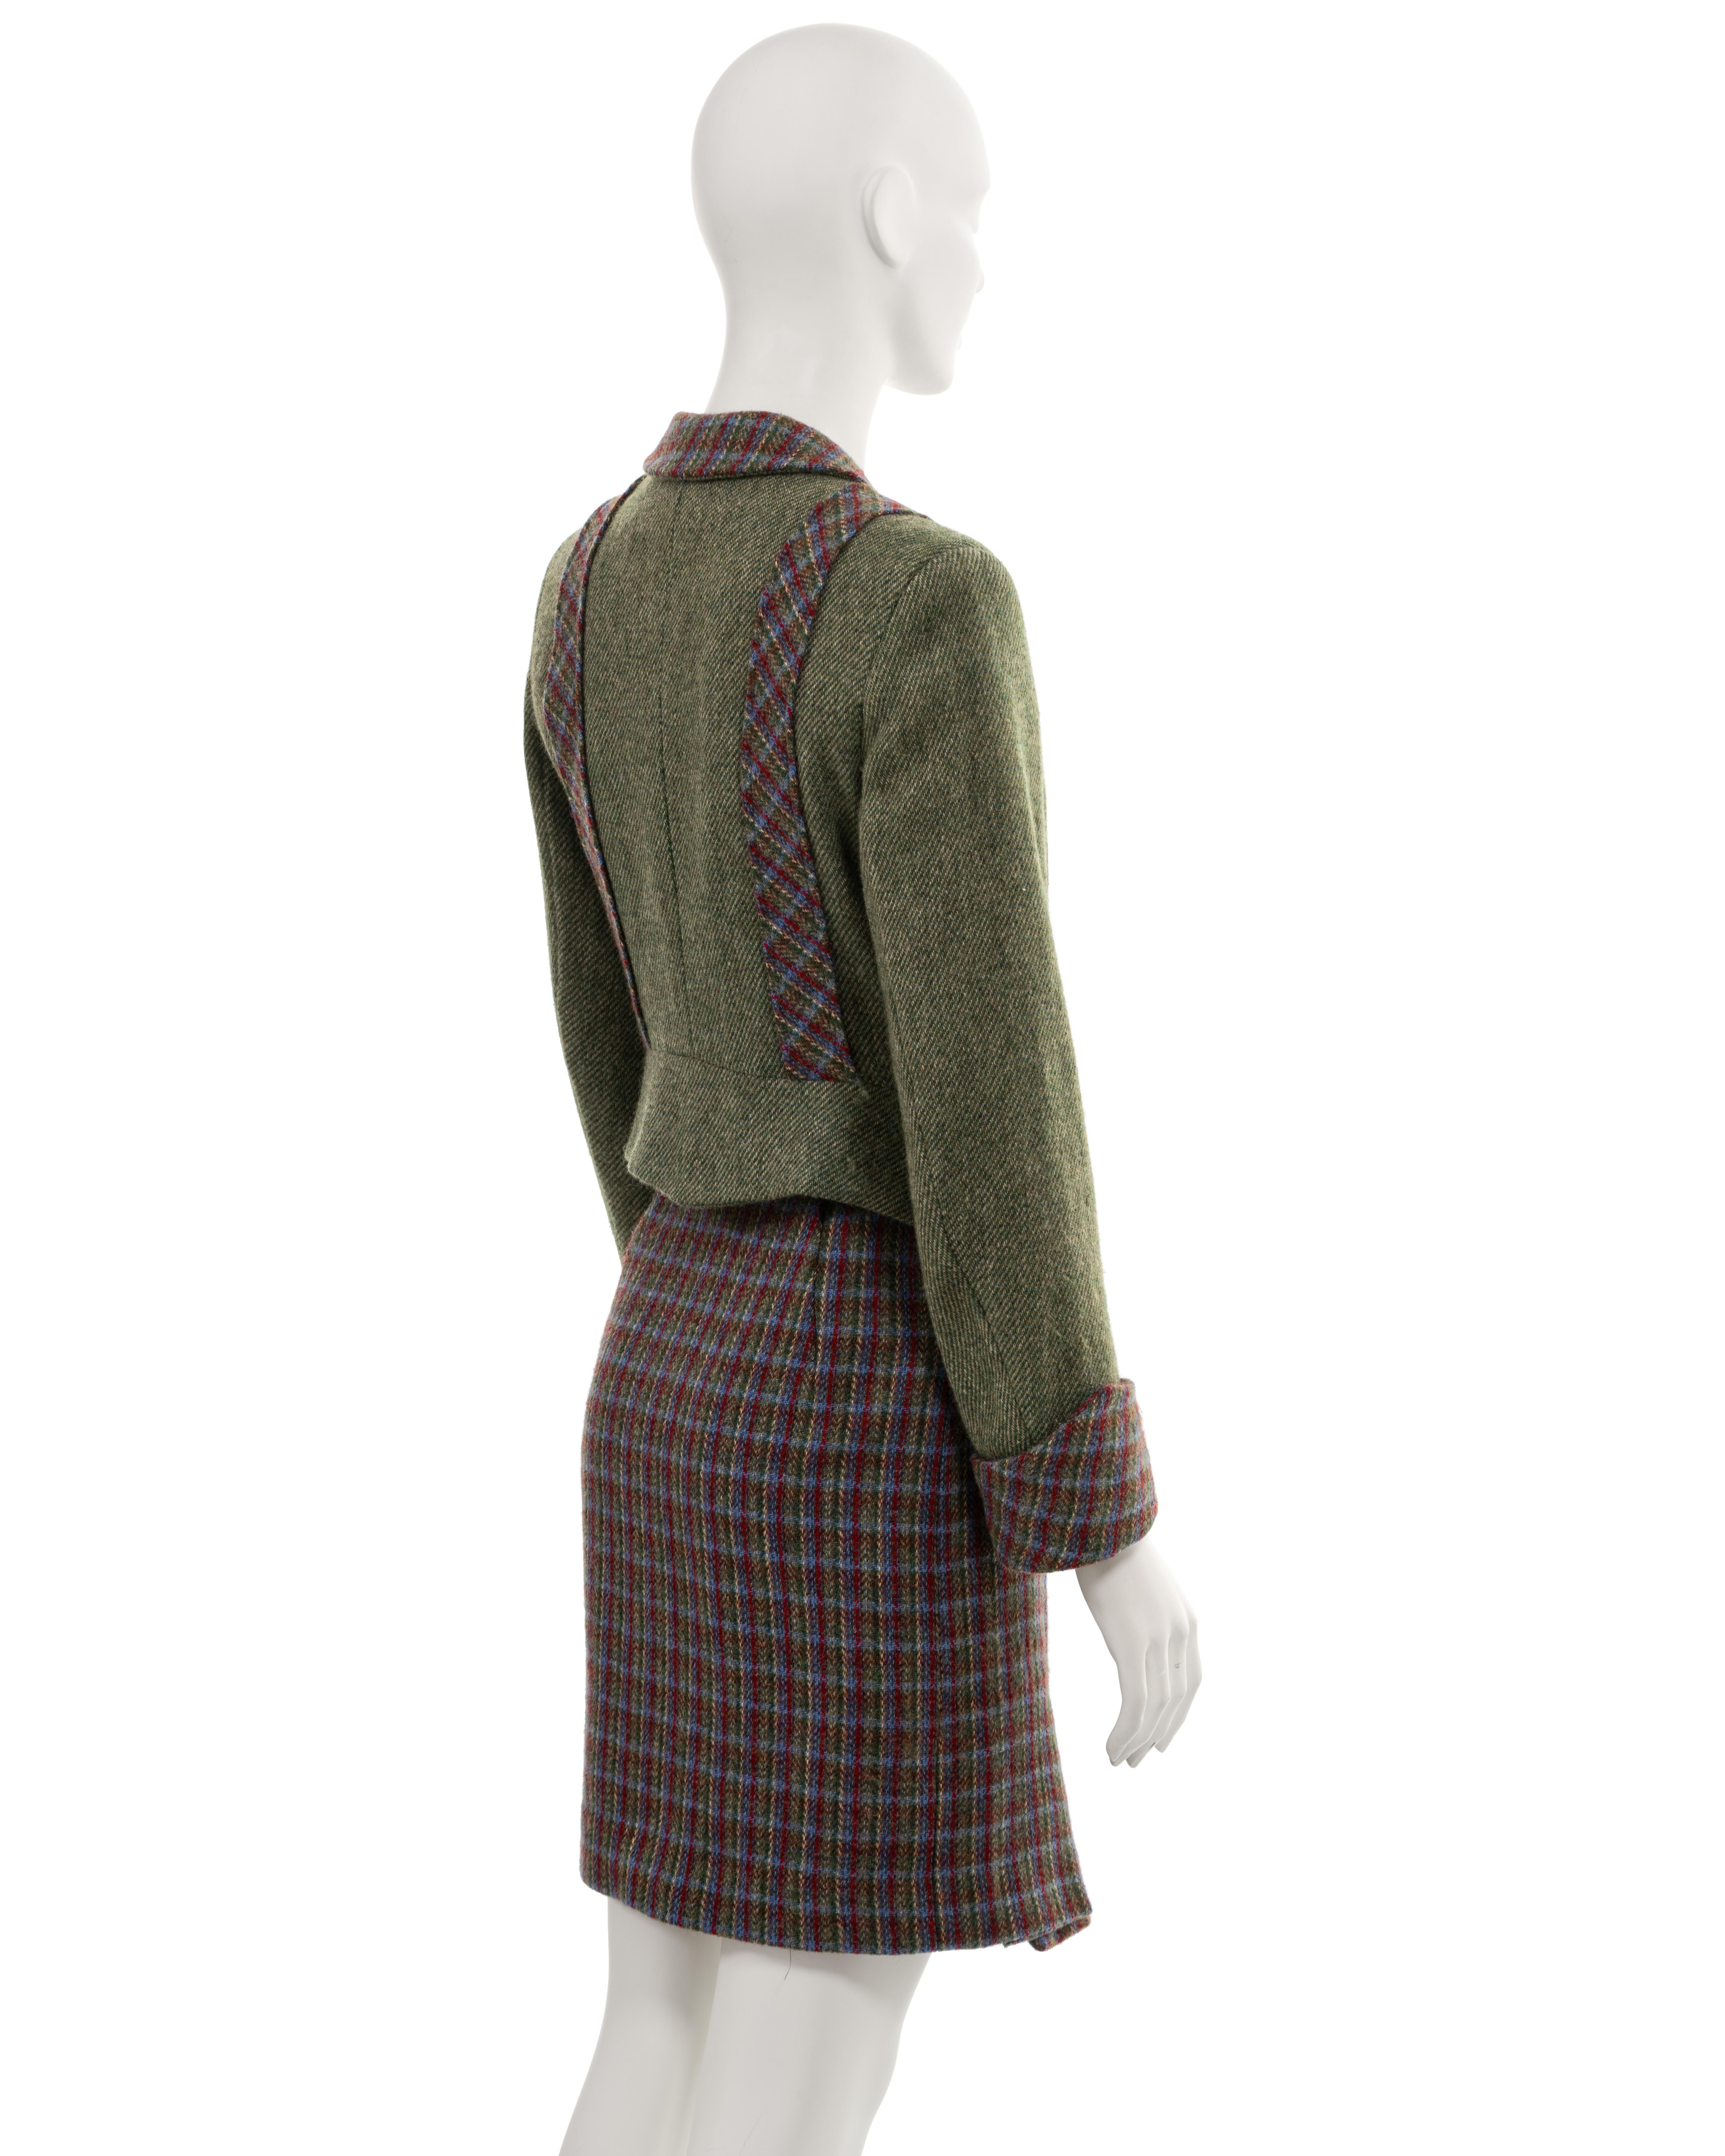 Vivienne Westwood 'Time Machine' tartan wool skirt suit, fw 1988 For Sale 6